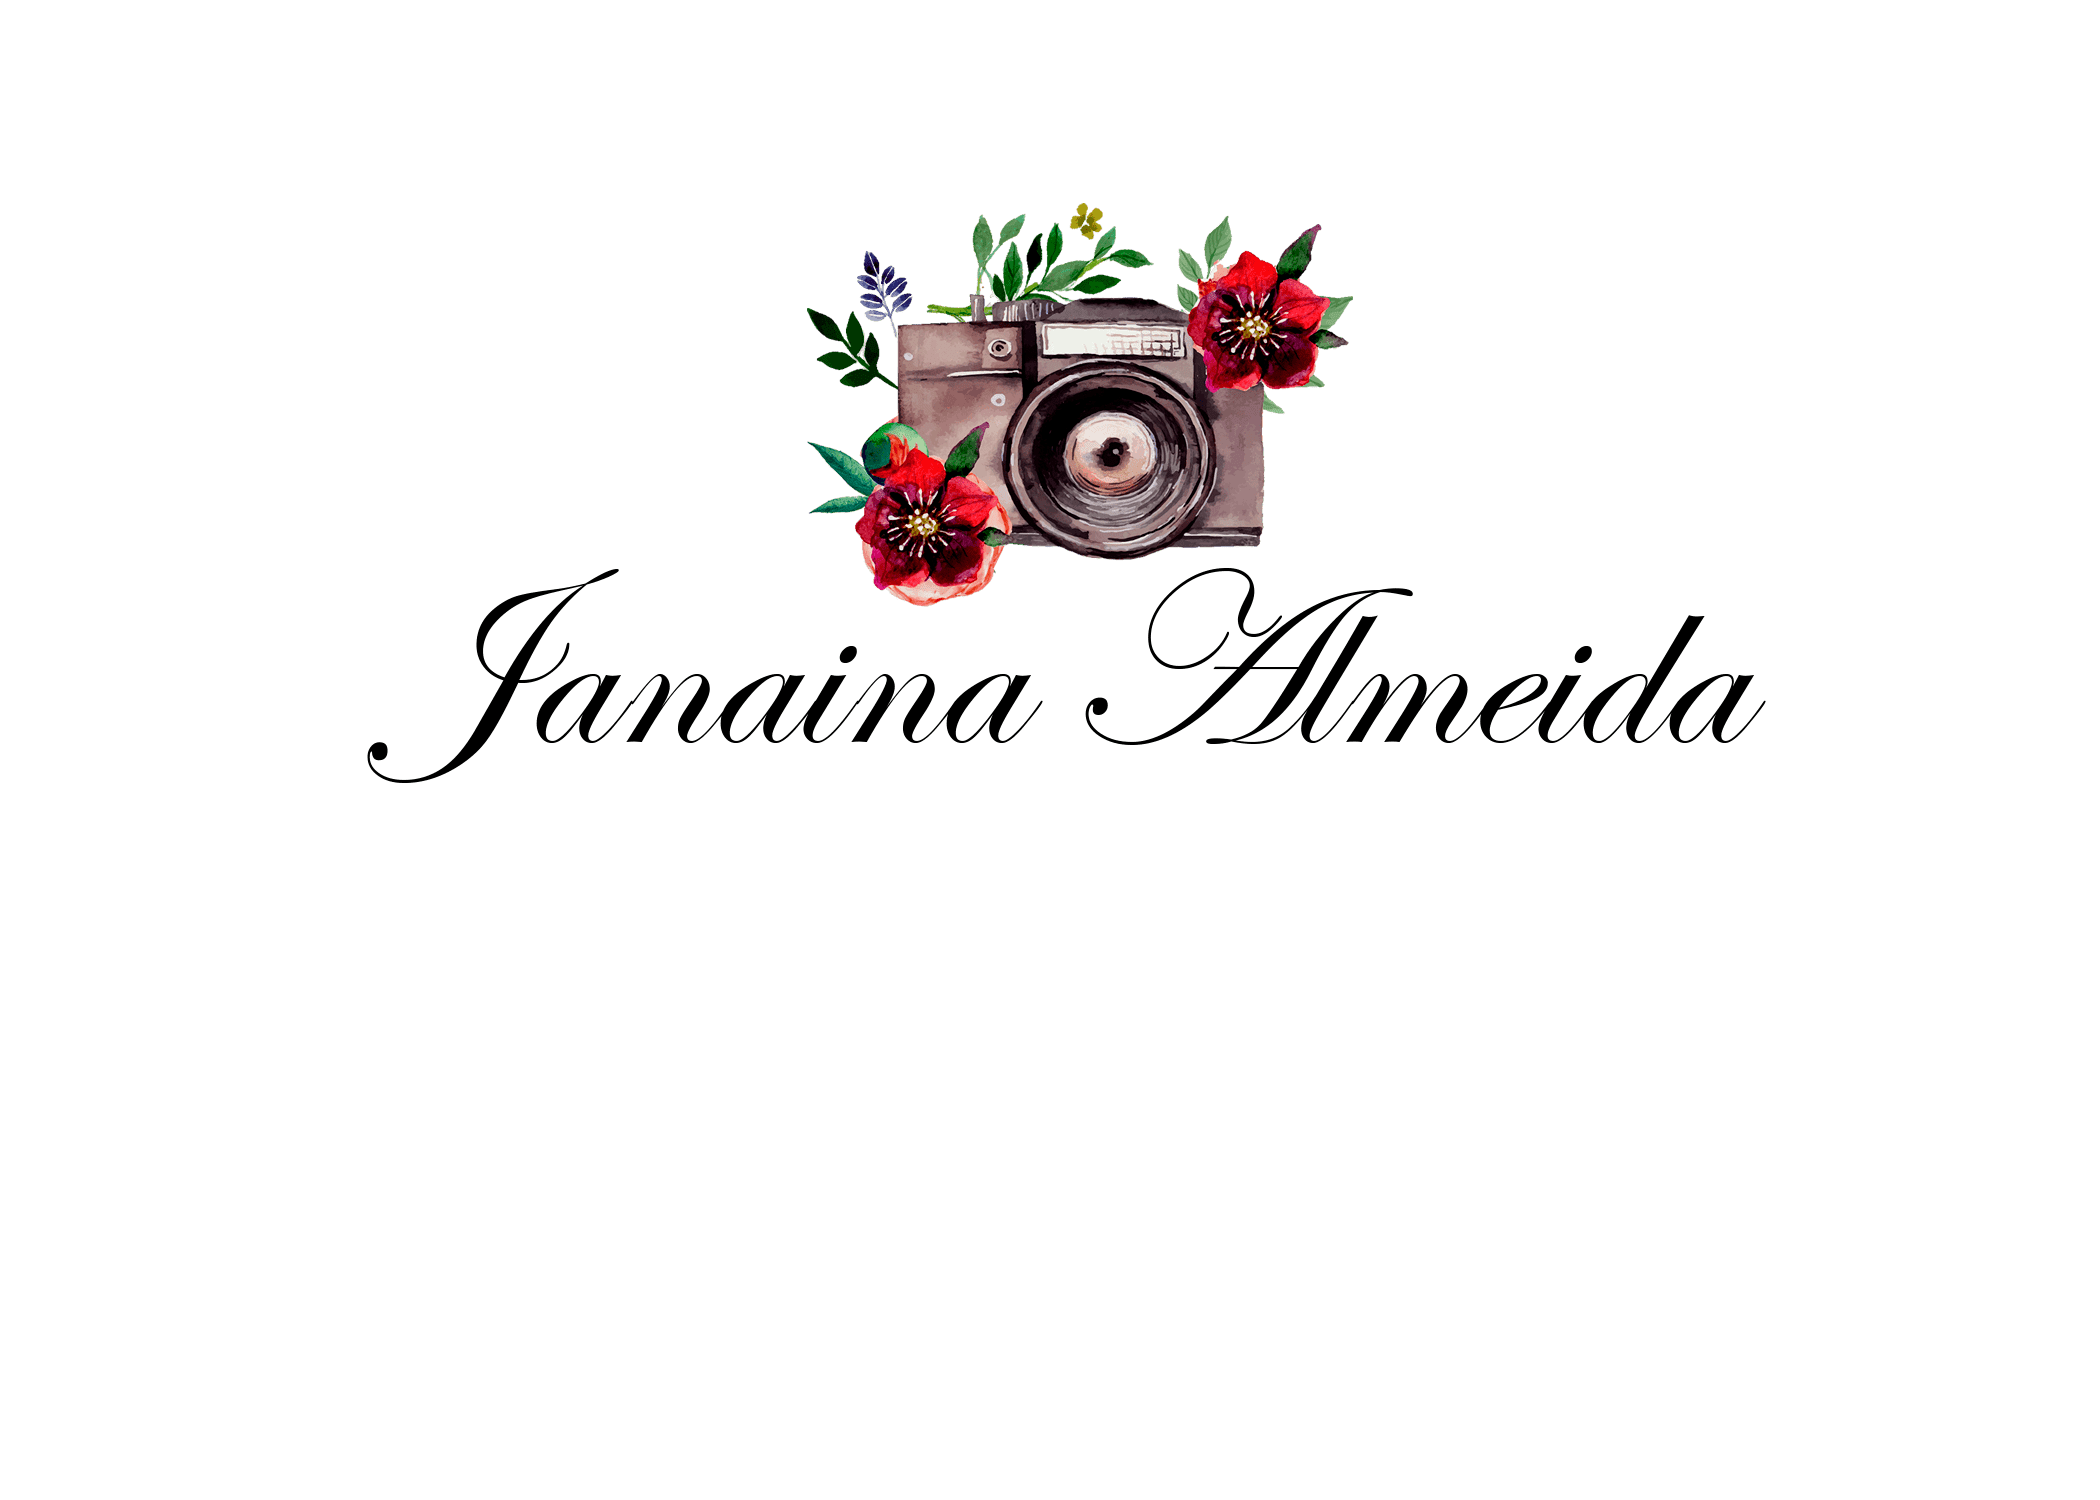 Janaina Almeida Fotografias